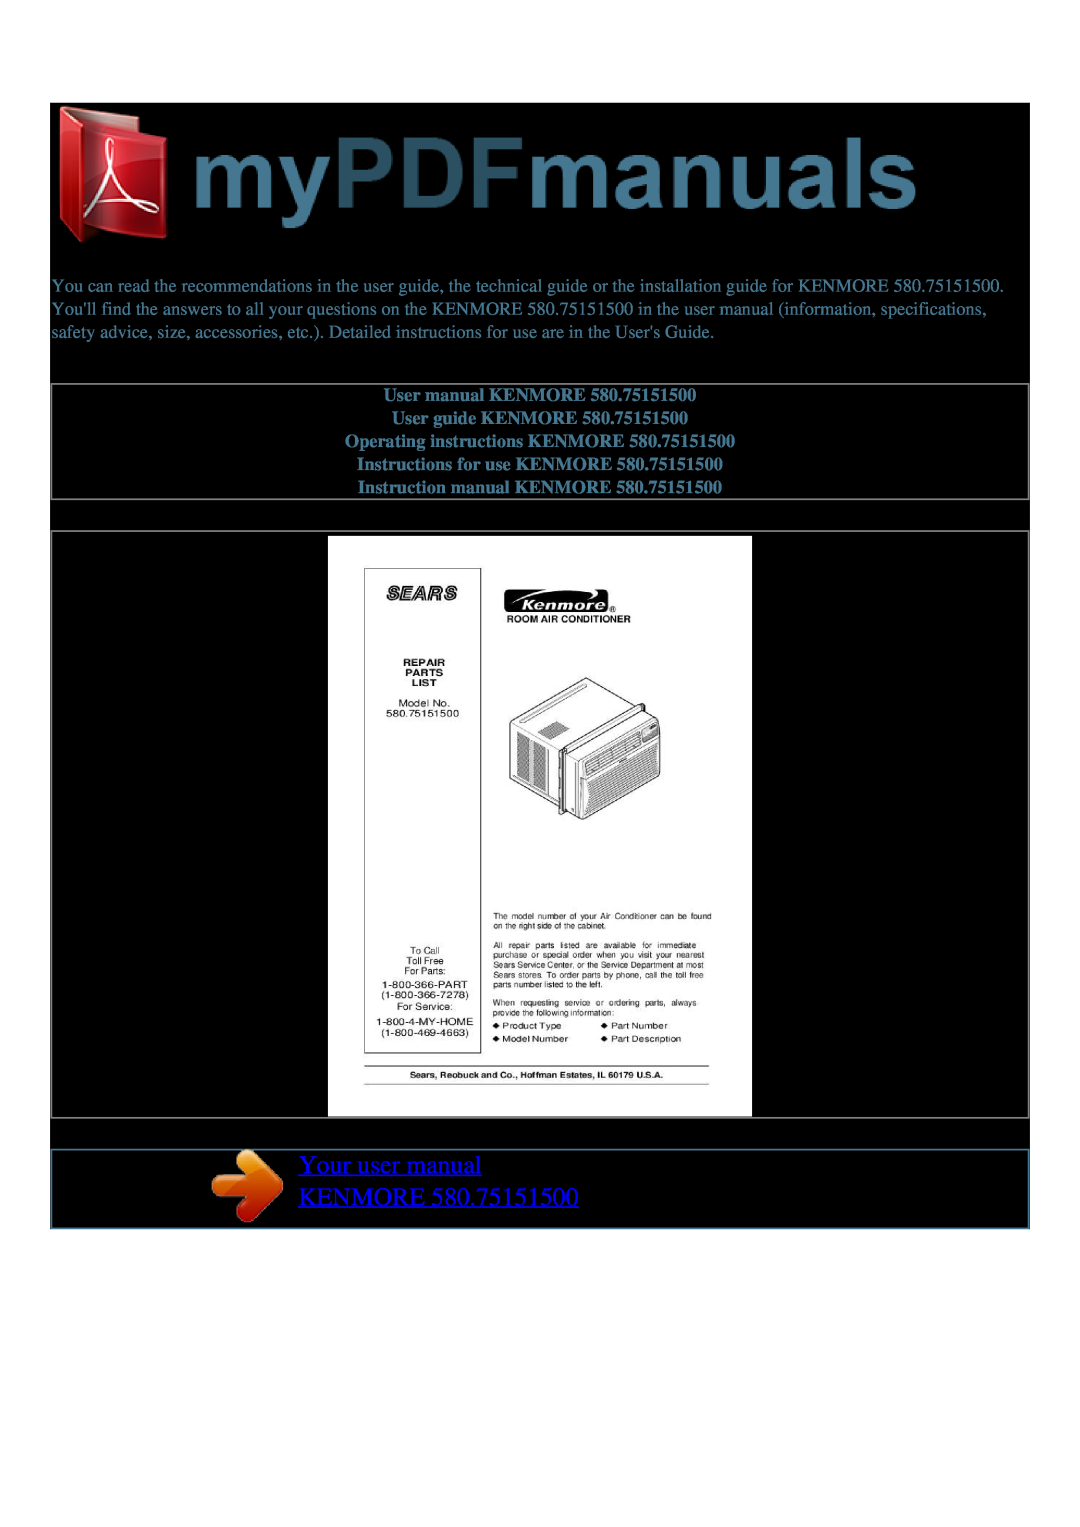 Kenmore 580.751515 user manual Operating instructions KENMORE, Instructions for use KENMORE 